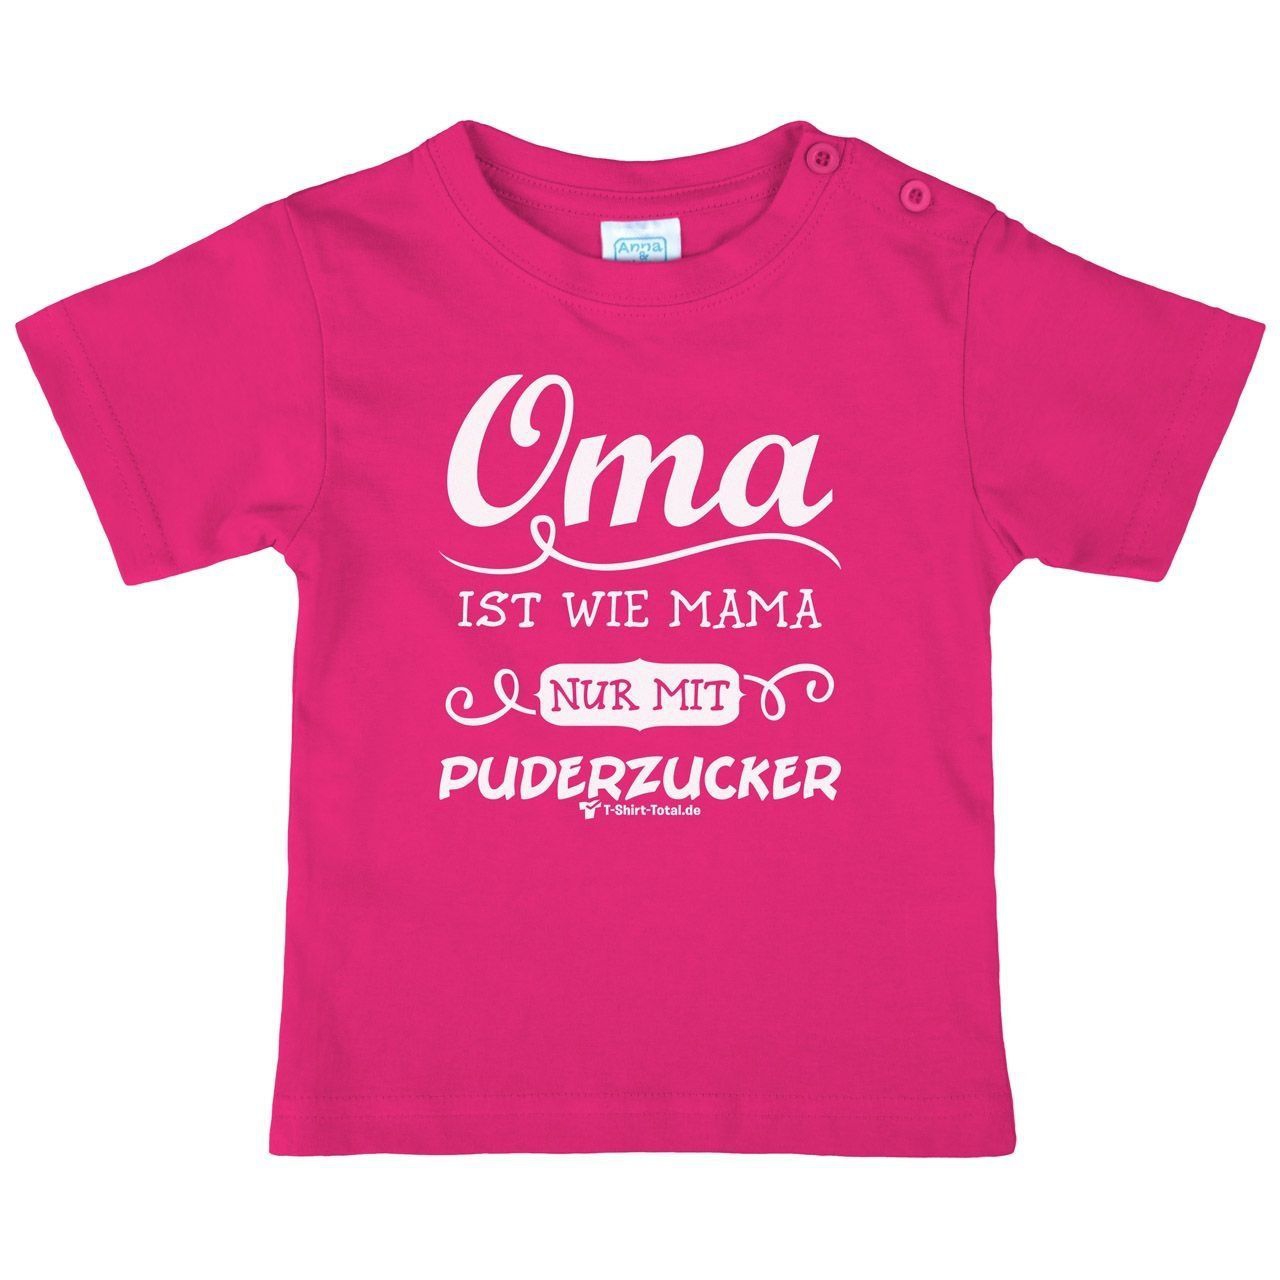 Oma Puderzucker Kinder T-Shirt pink 80 / 86